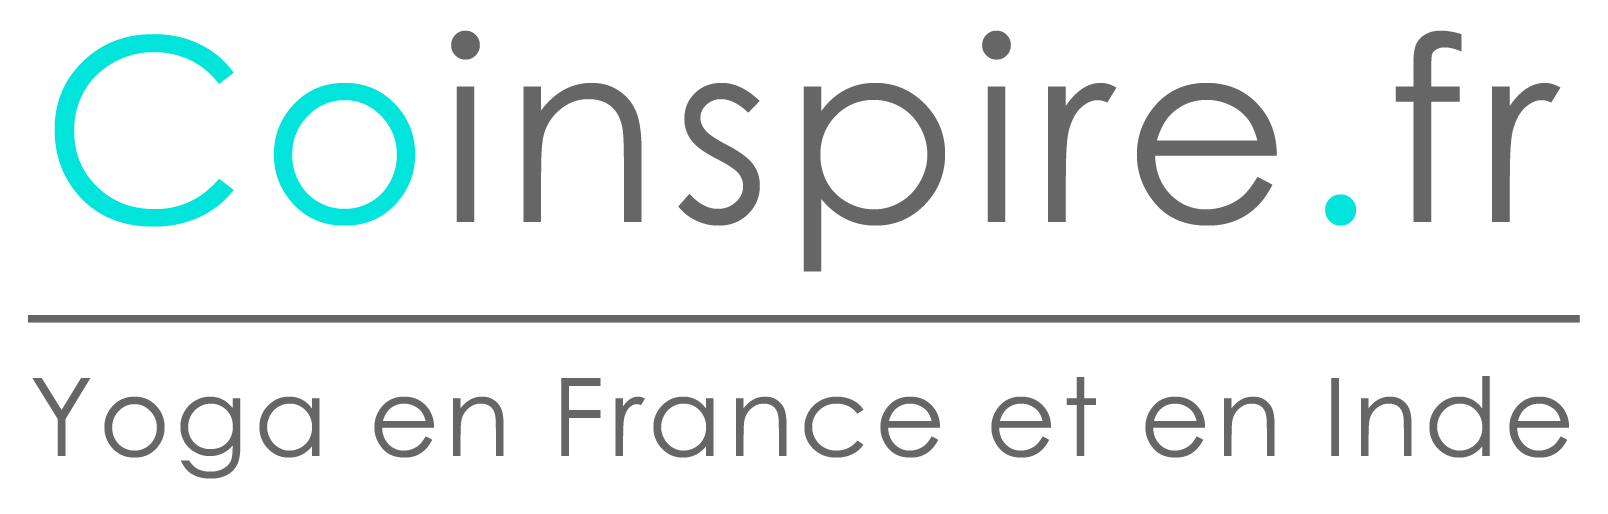 logo-coinspire-bandeau-gris